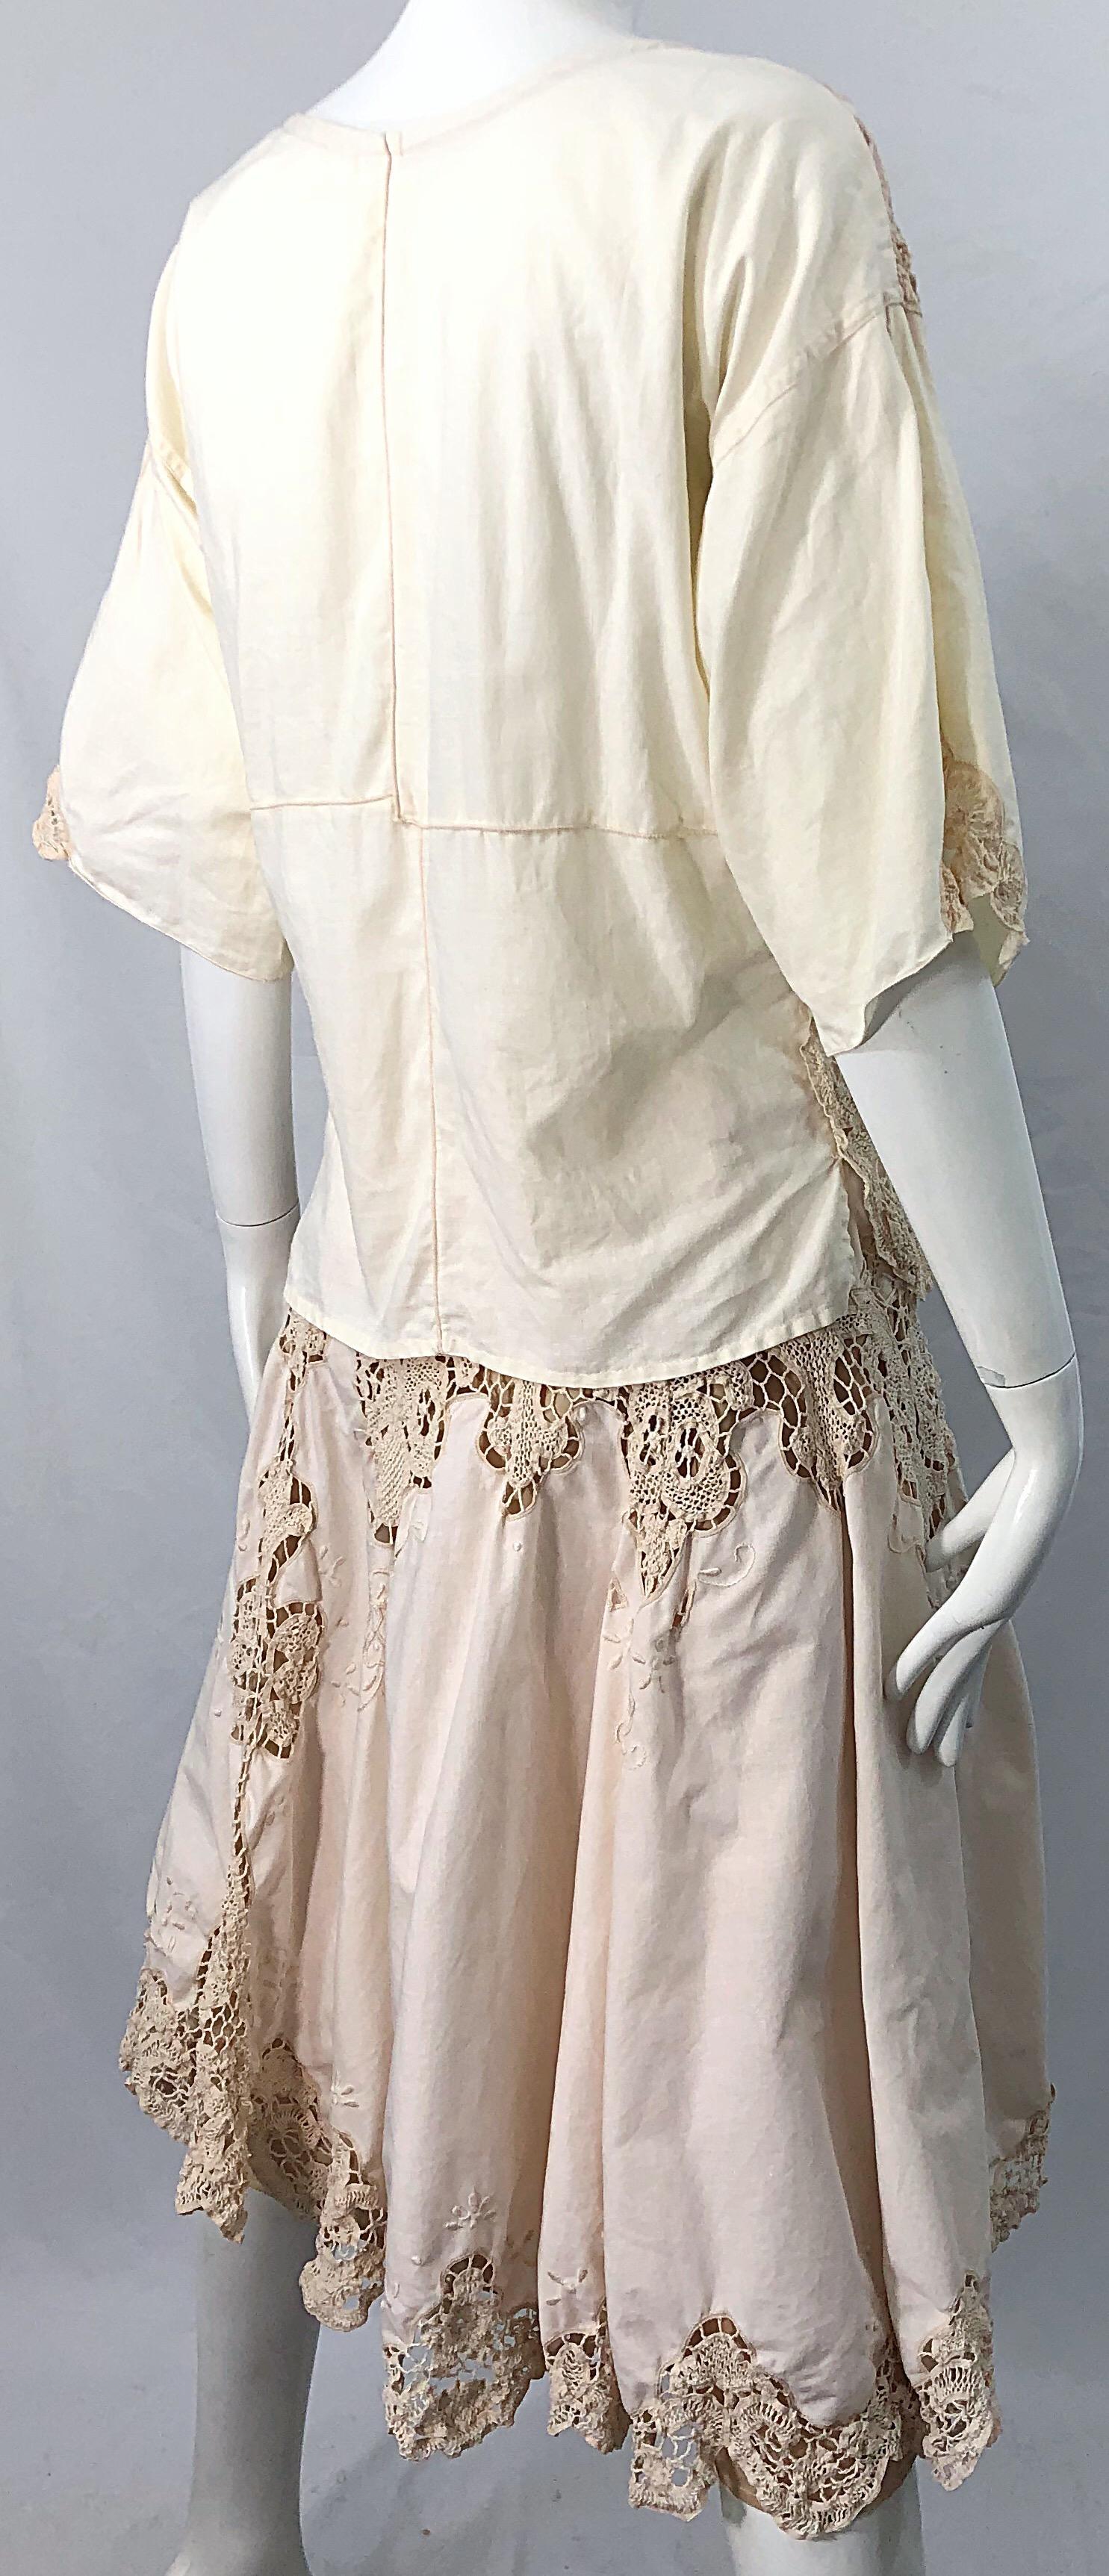 1980s Ivory Cotton Crochet Boho Shirt / Skirt Vintage 80s Dress Ensemble Set 6